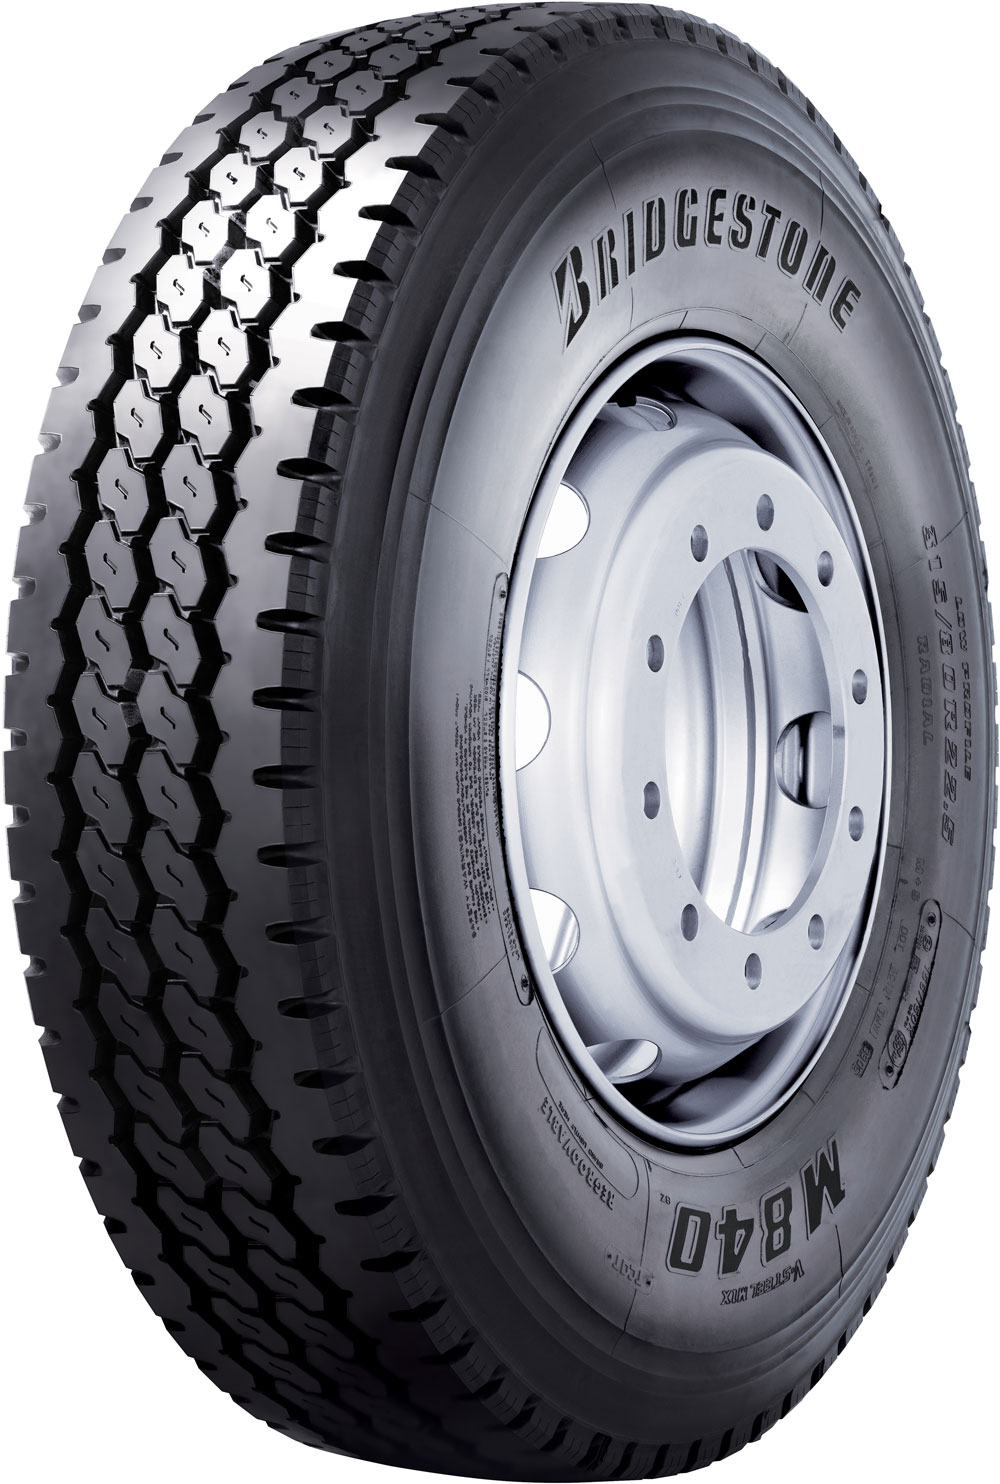 product_type-heavy_tires BRIDGESTONE V-STEEL MIX M840 16 TL 275/70 R22.5 148K